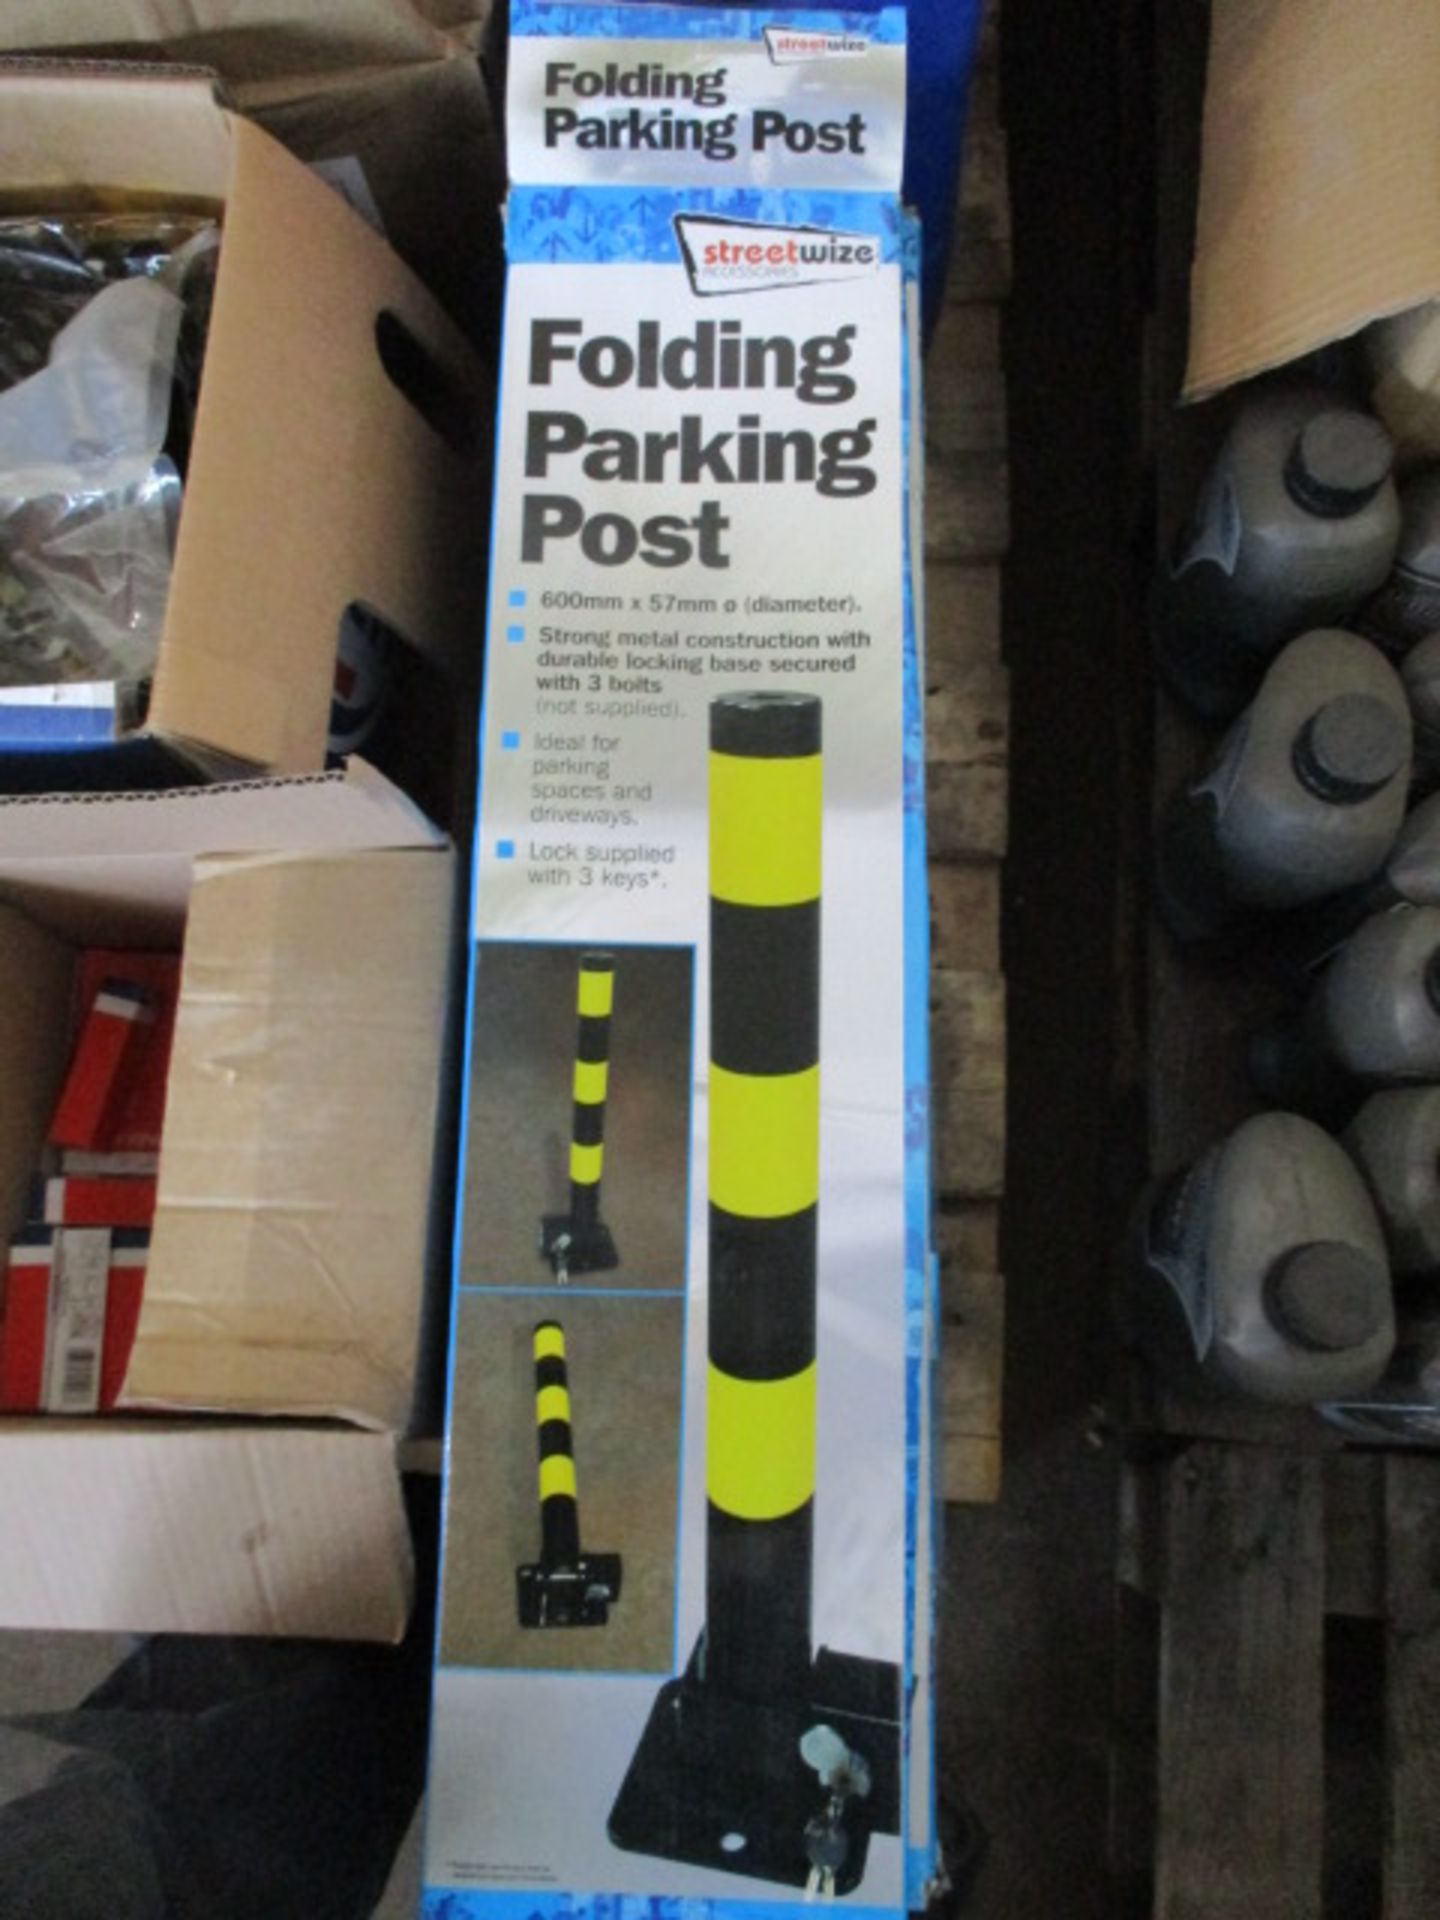 Folding parking post